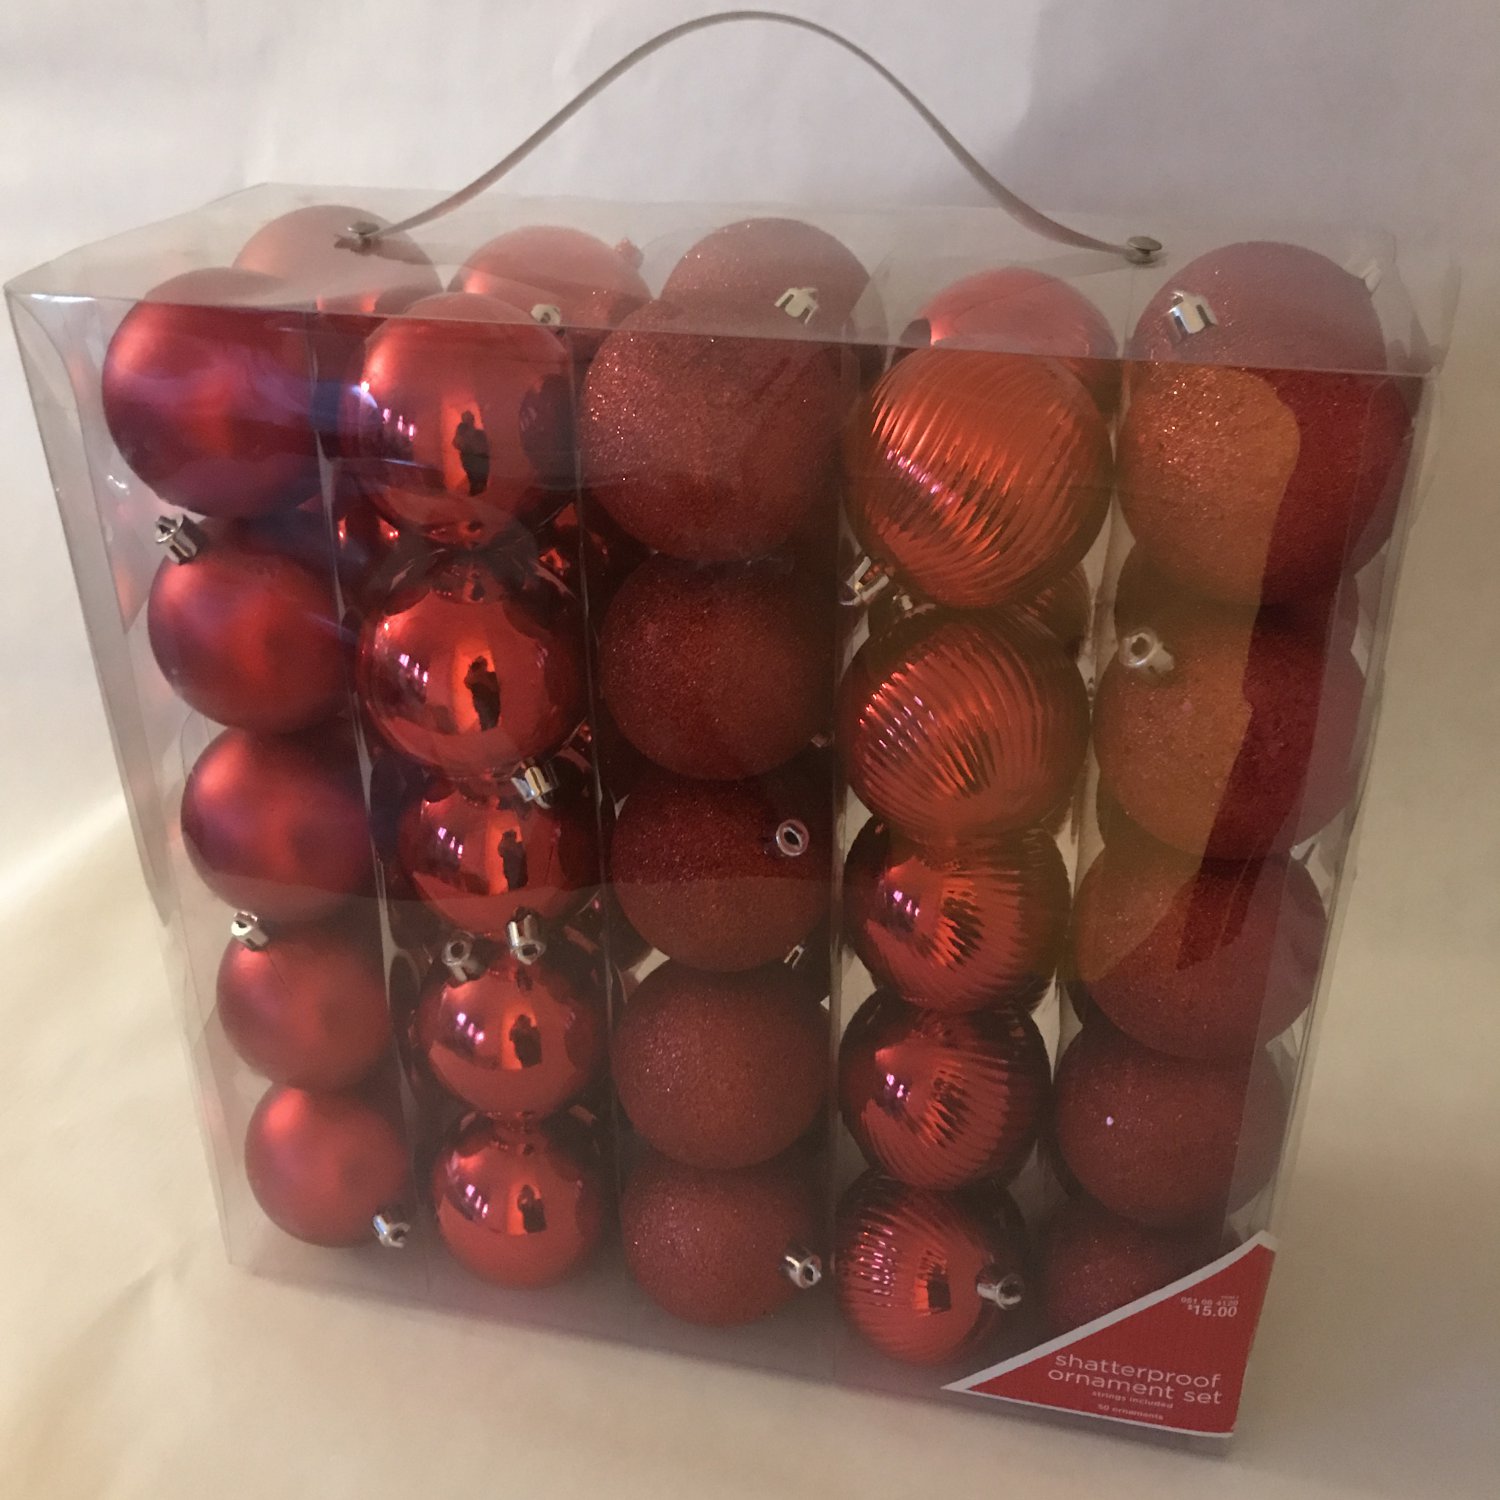 TARGET Shatterproof Decorative Christmas Balls Ornaments 50 ct Red